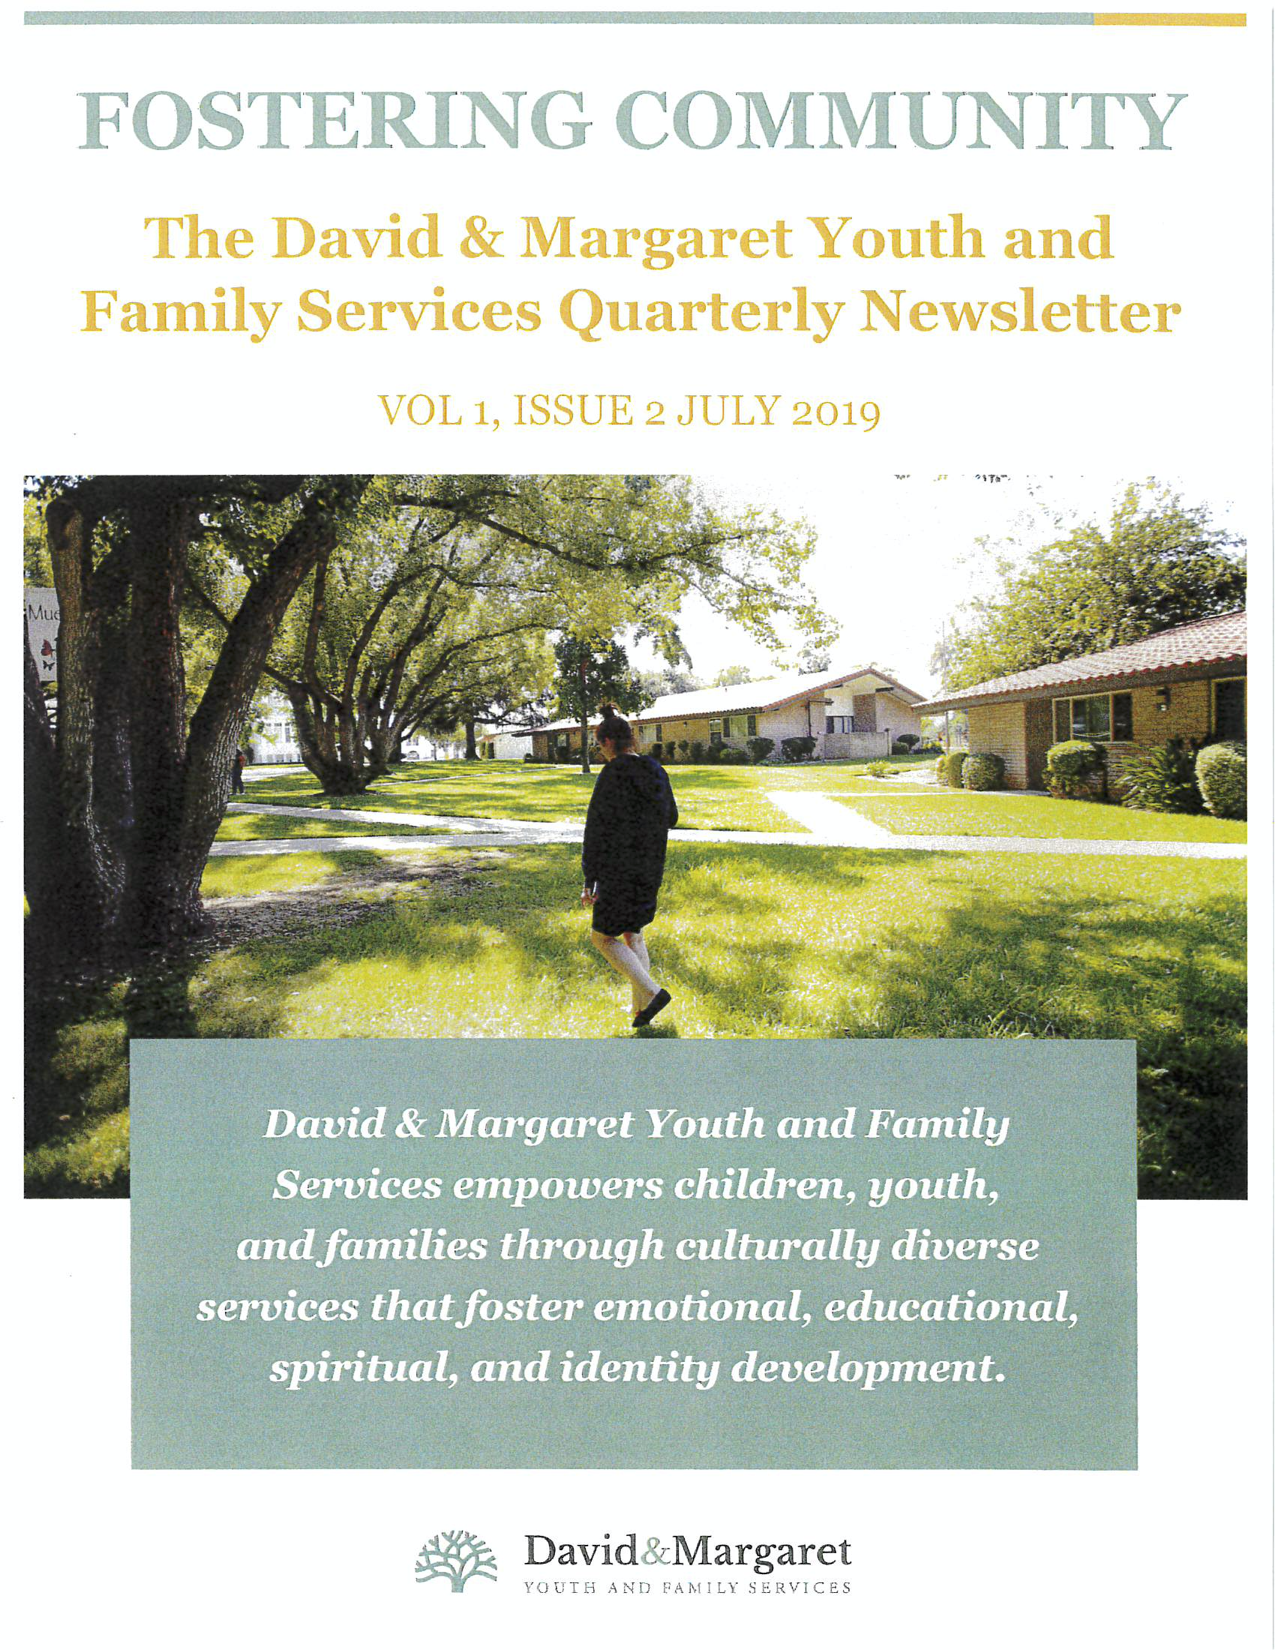 David & Margaret Quarterly Newsletter Vol. 1 Issue 2